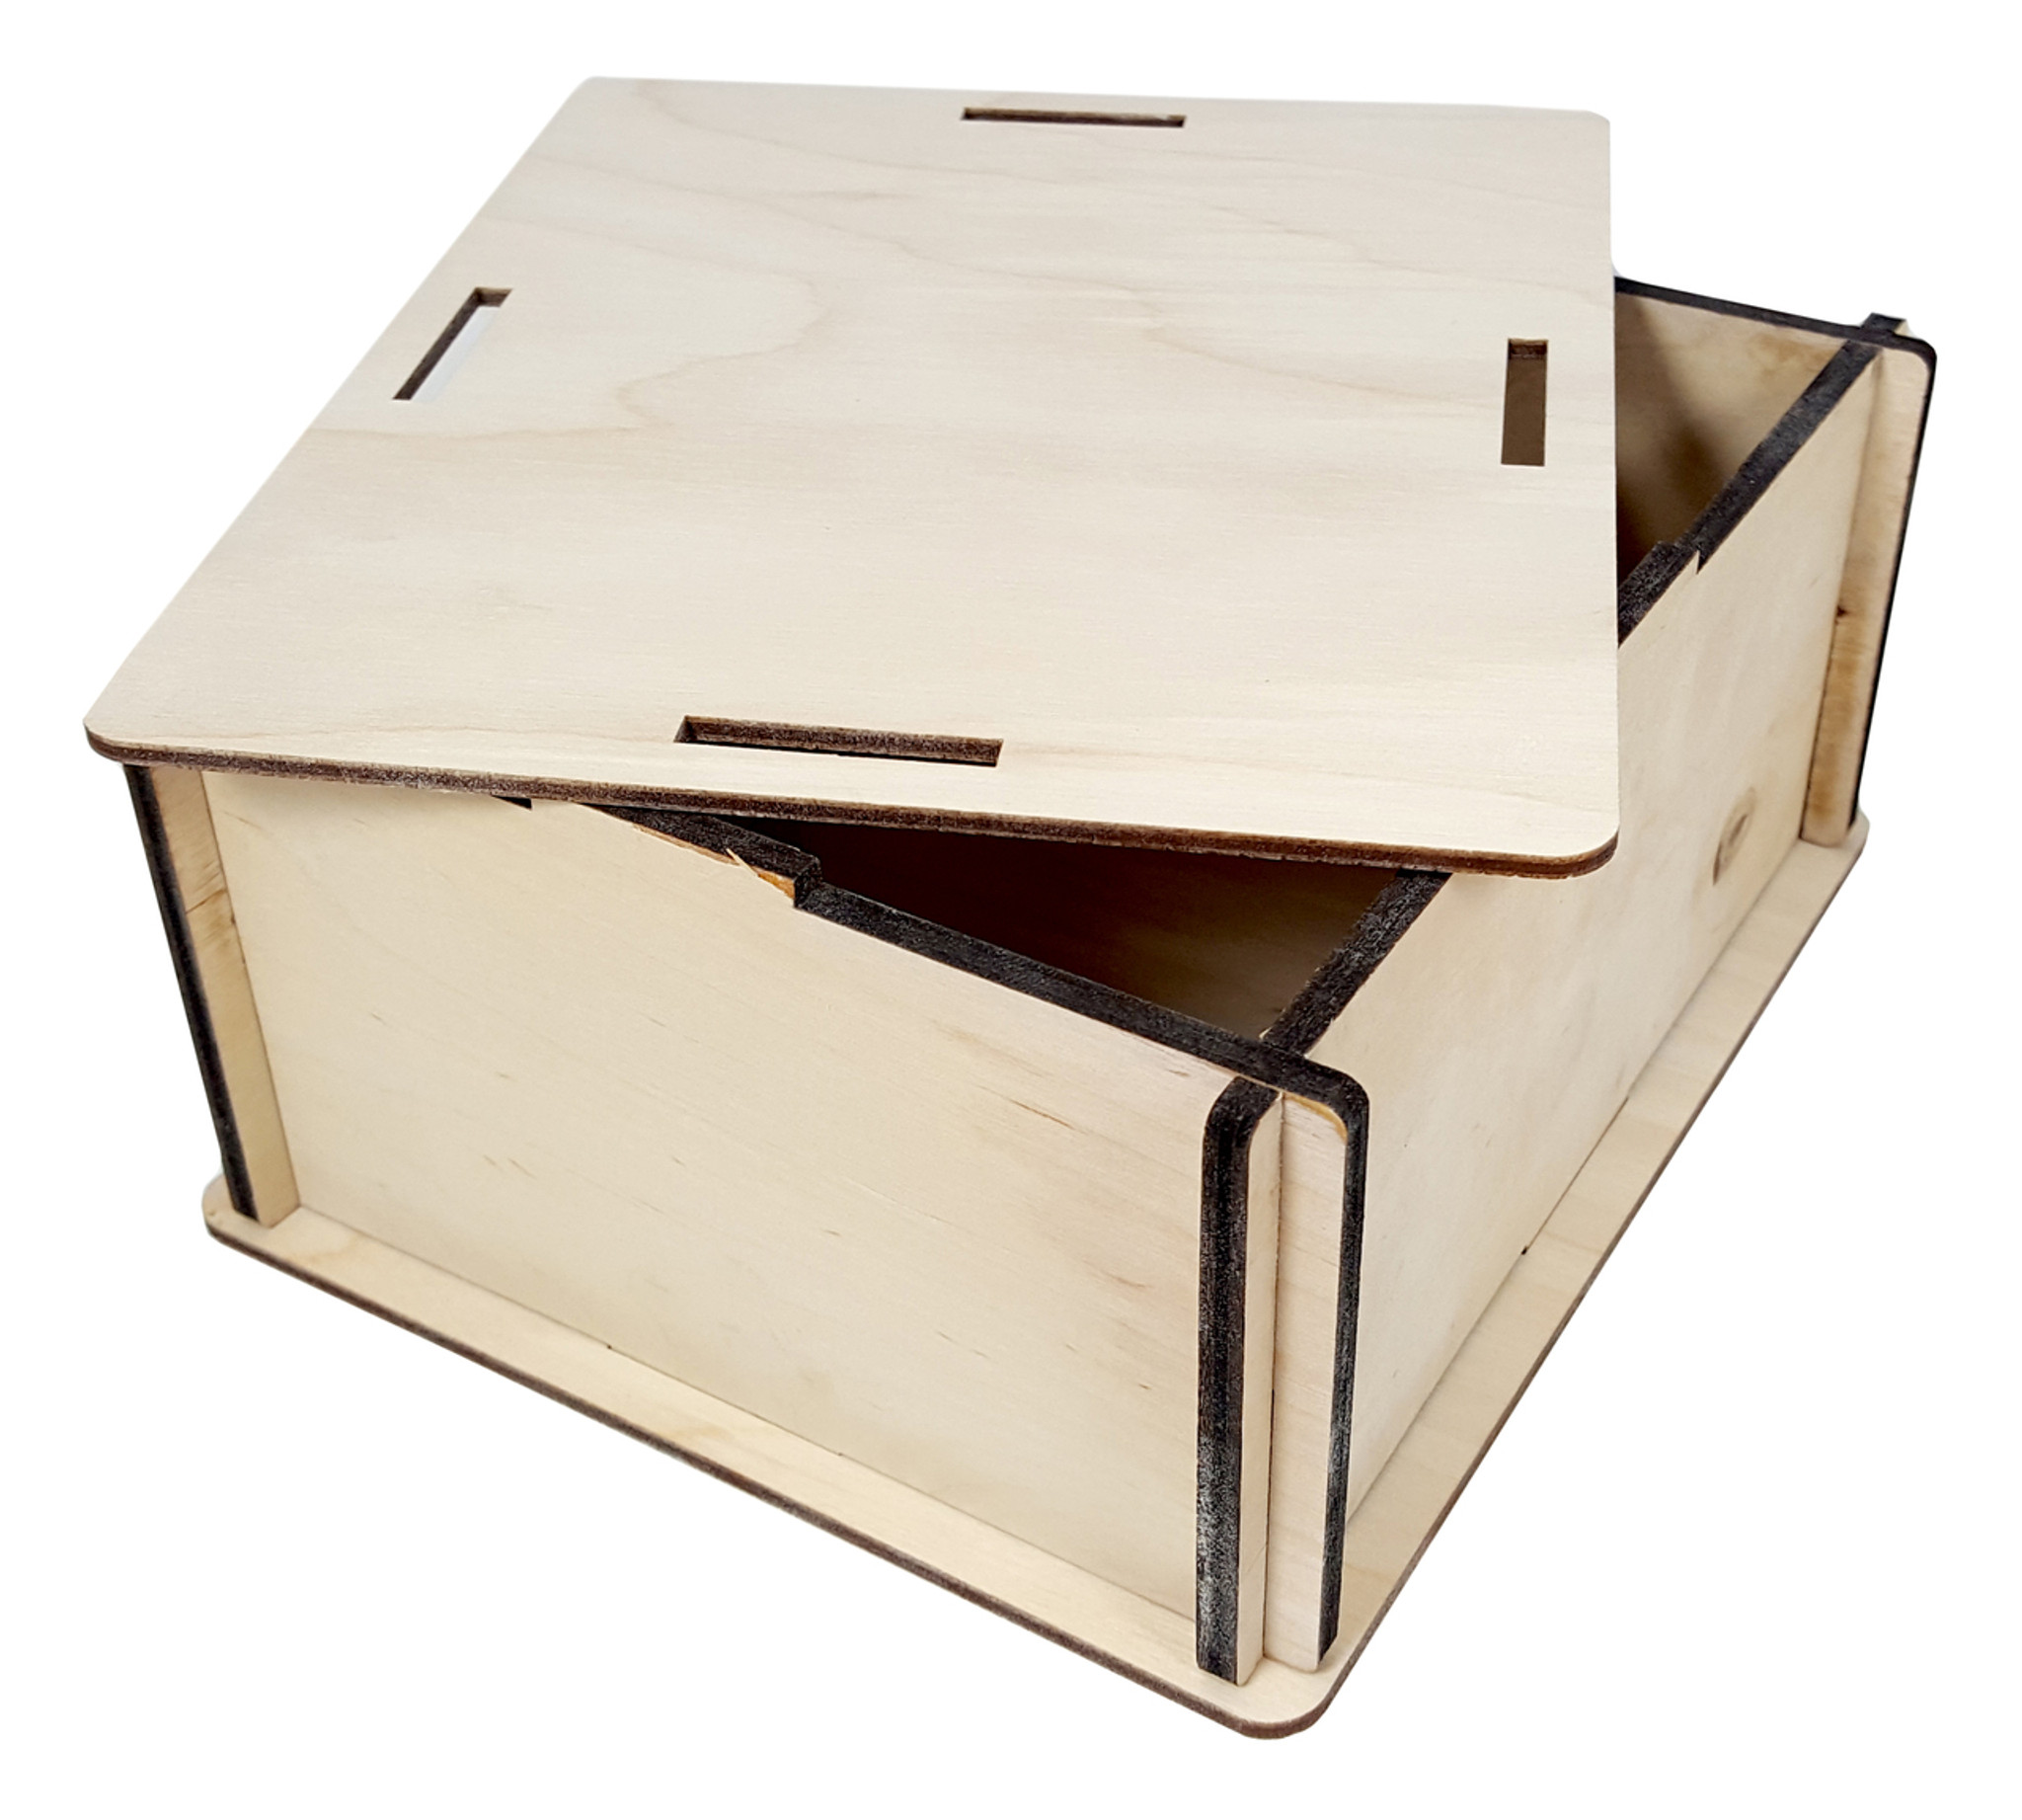 Amp-size DIY Wooden Box Enclosure Kit - 6